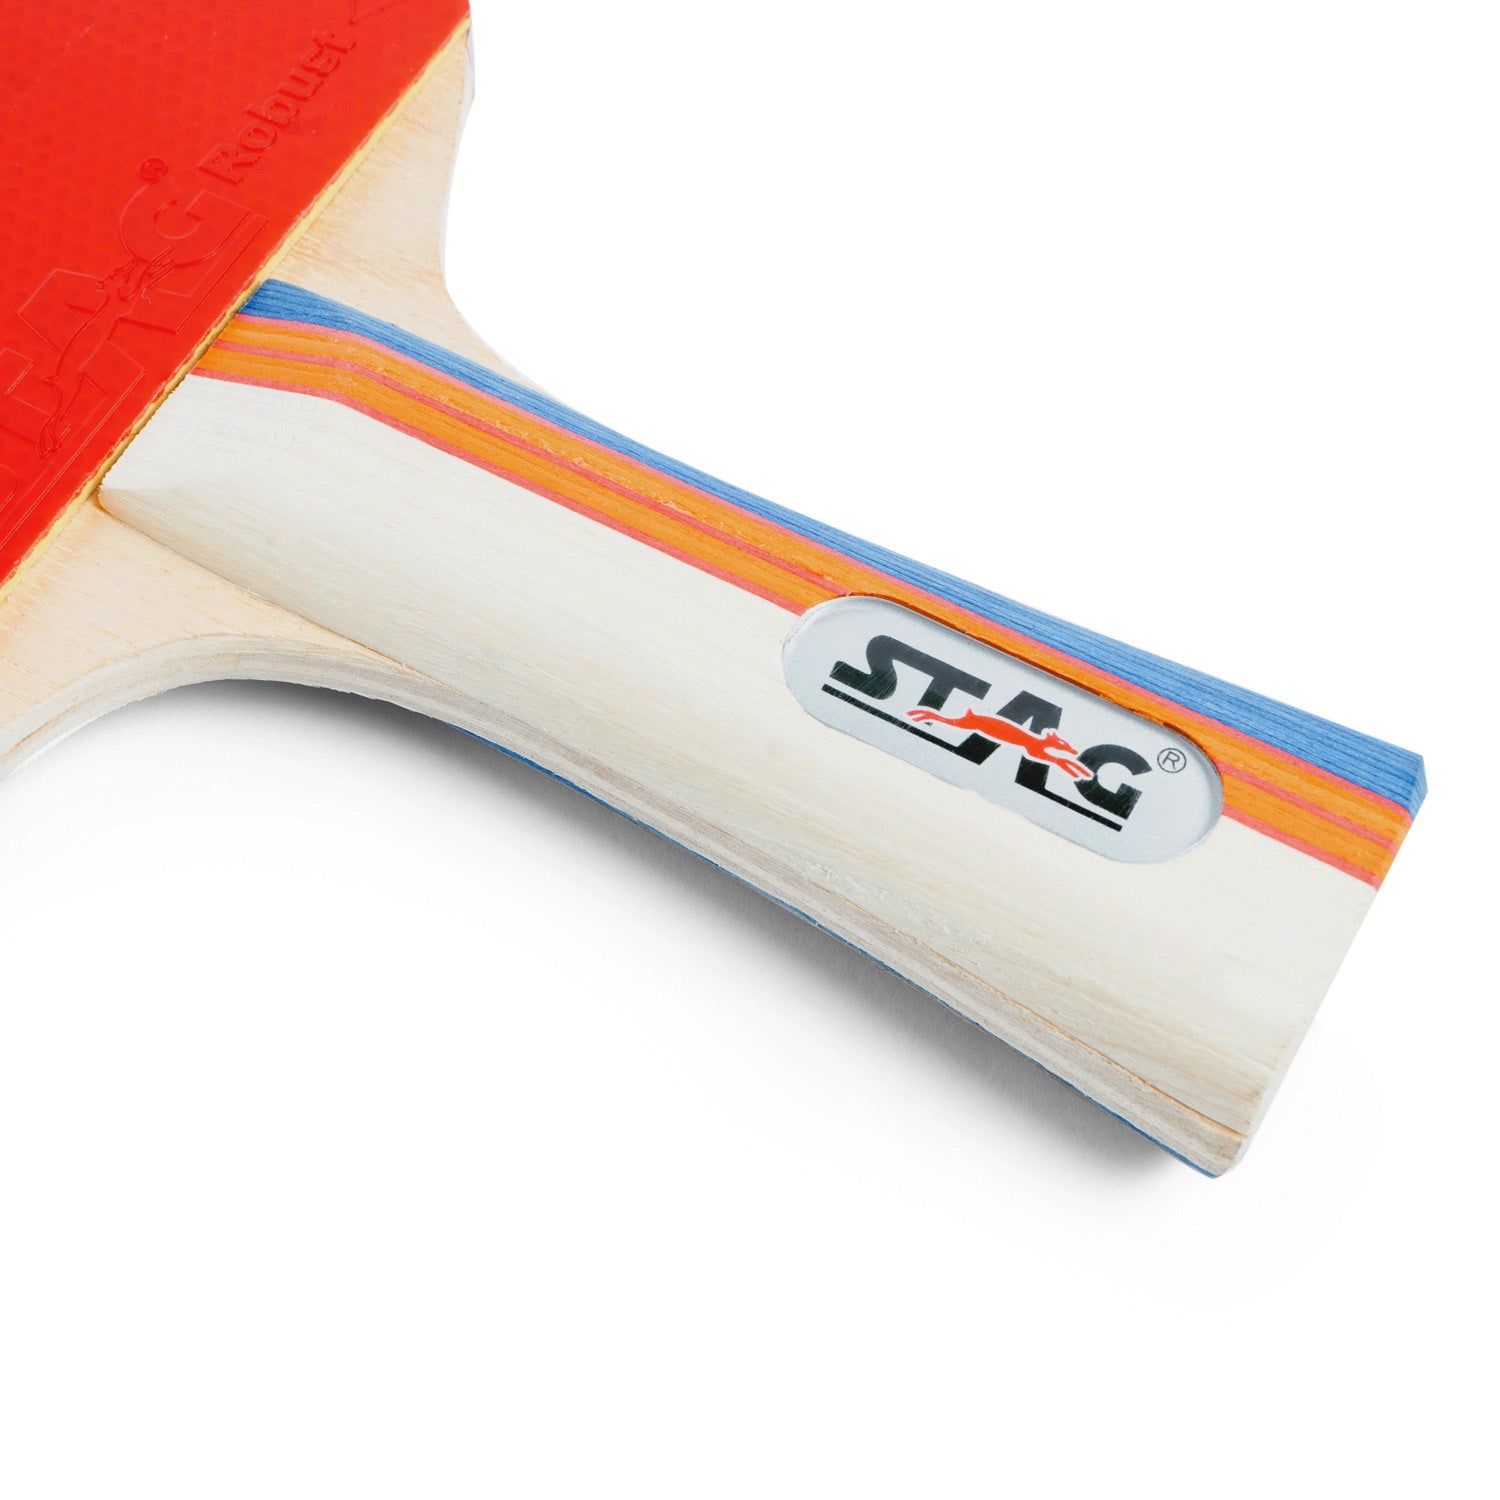 STAG 5 Star Table Tennis (T.T) Racquet|Beginner-Intermediate Series T.T Racquet